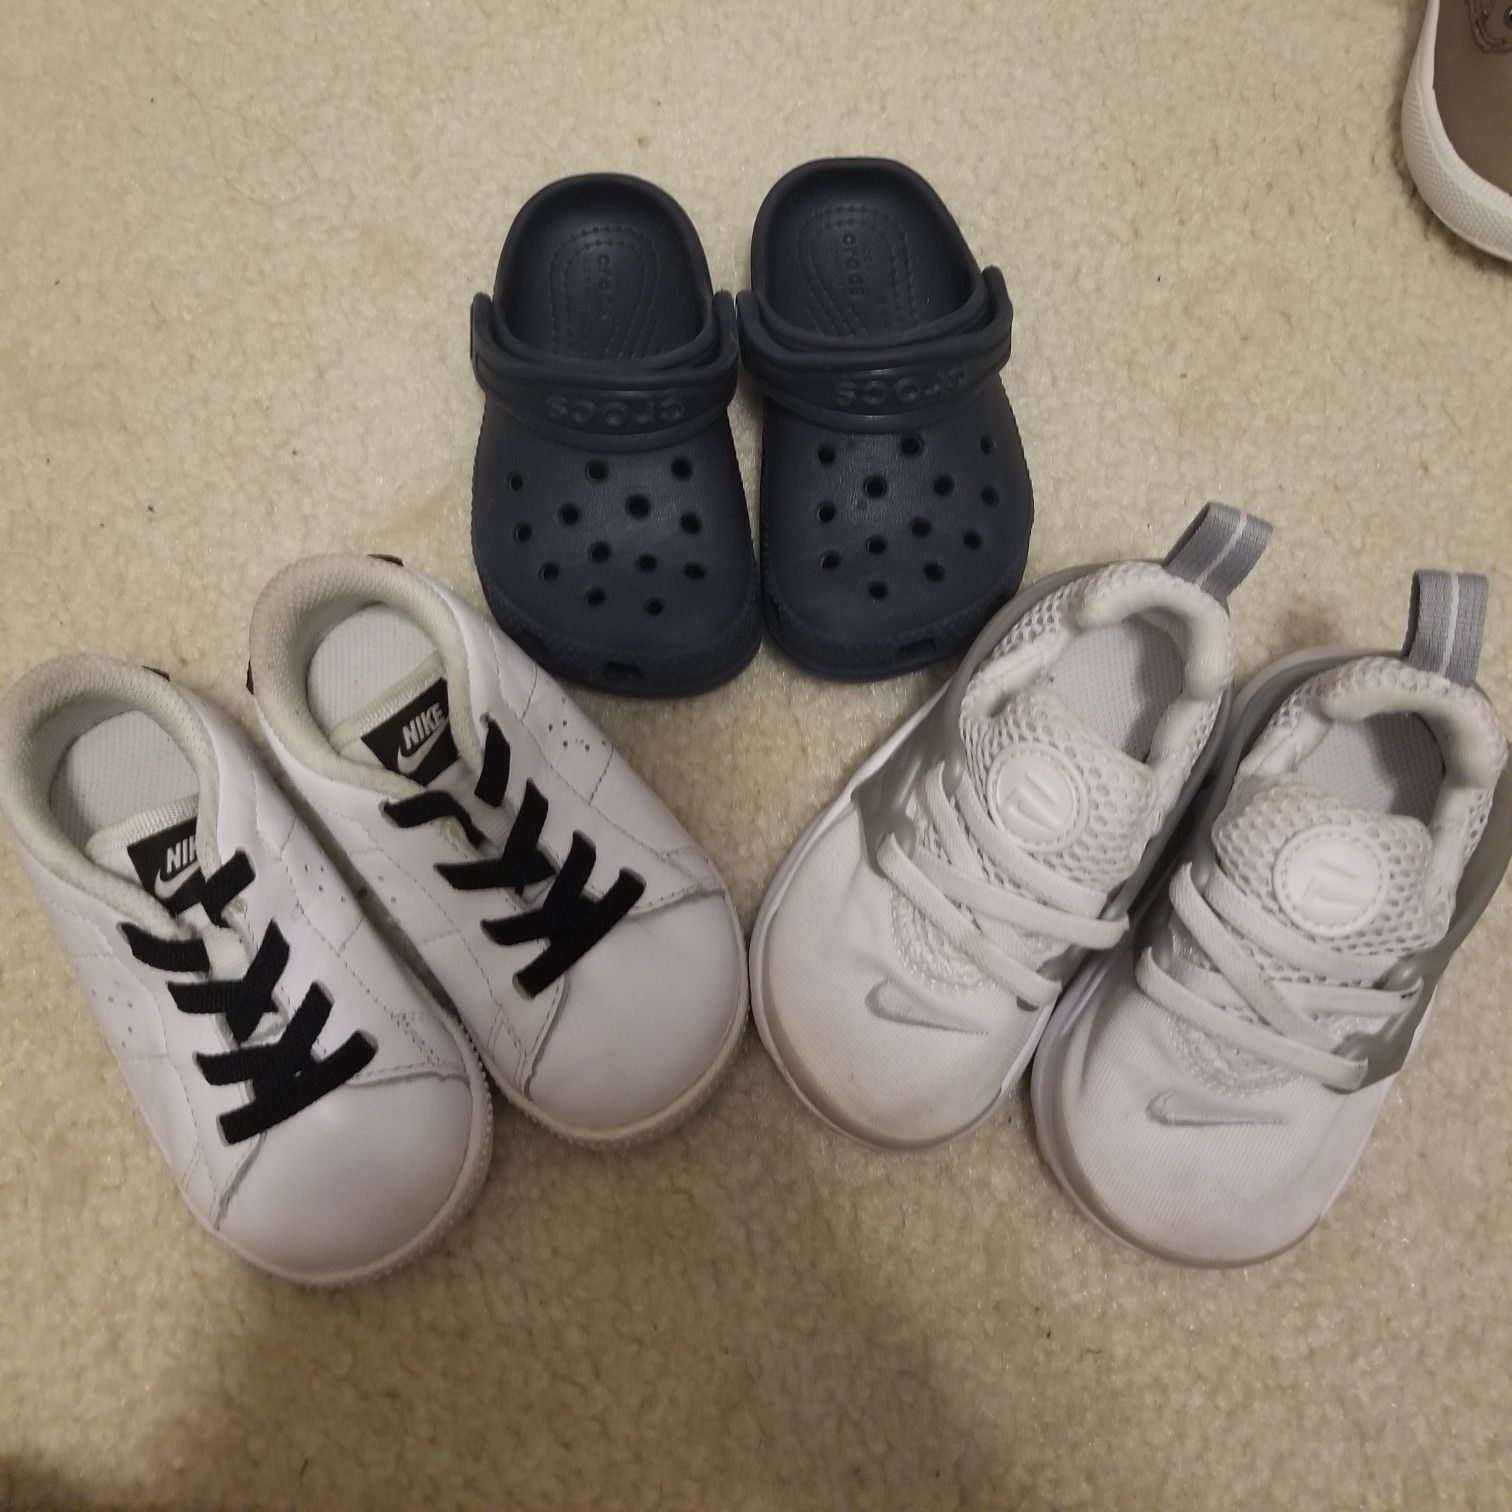 Crocs and Nike boy shoes